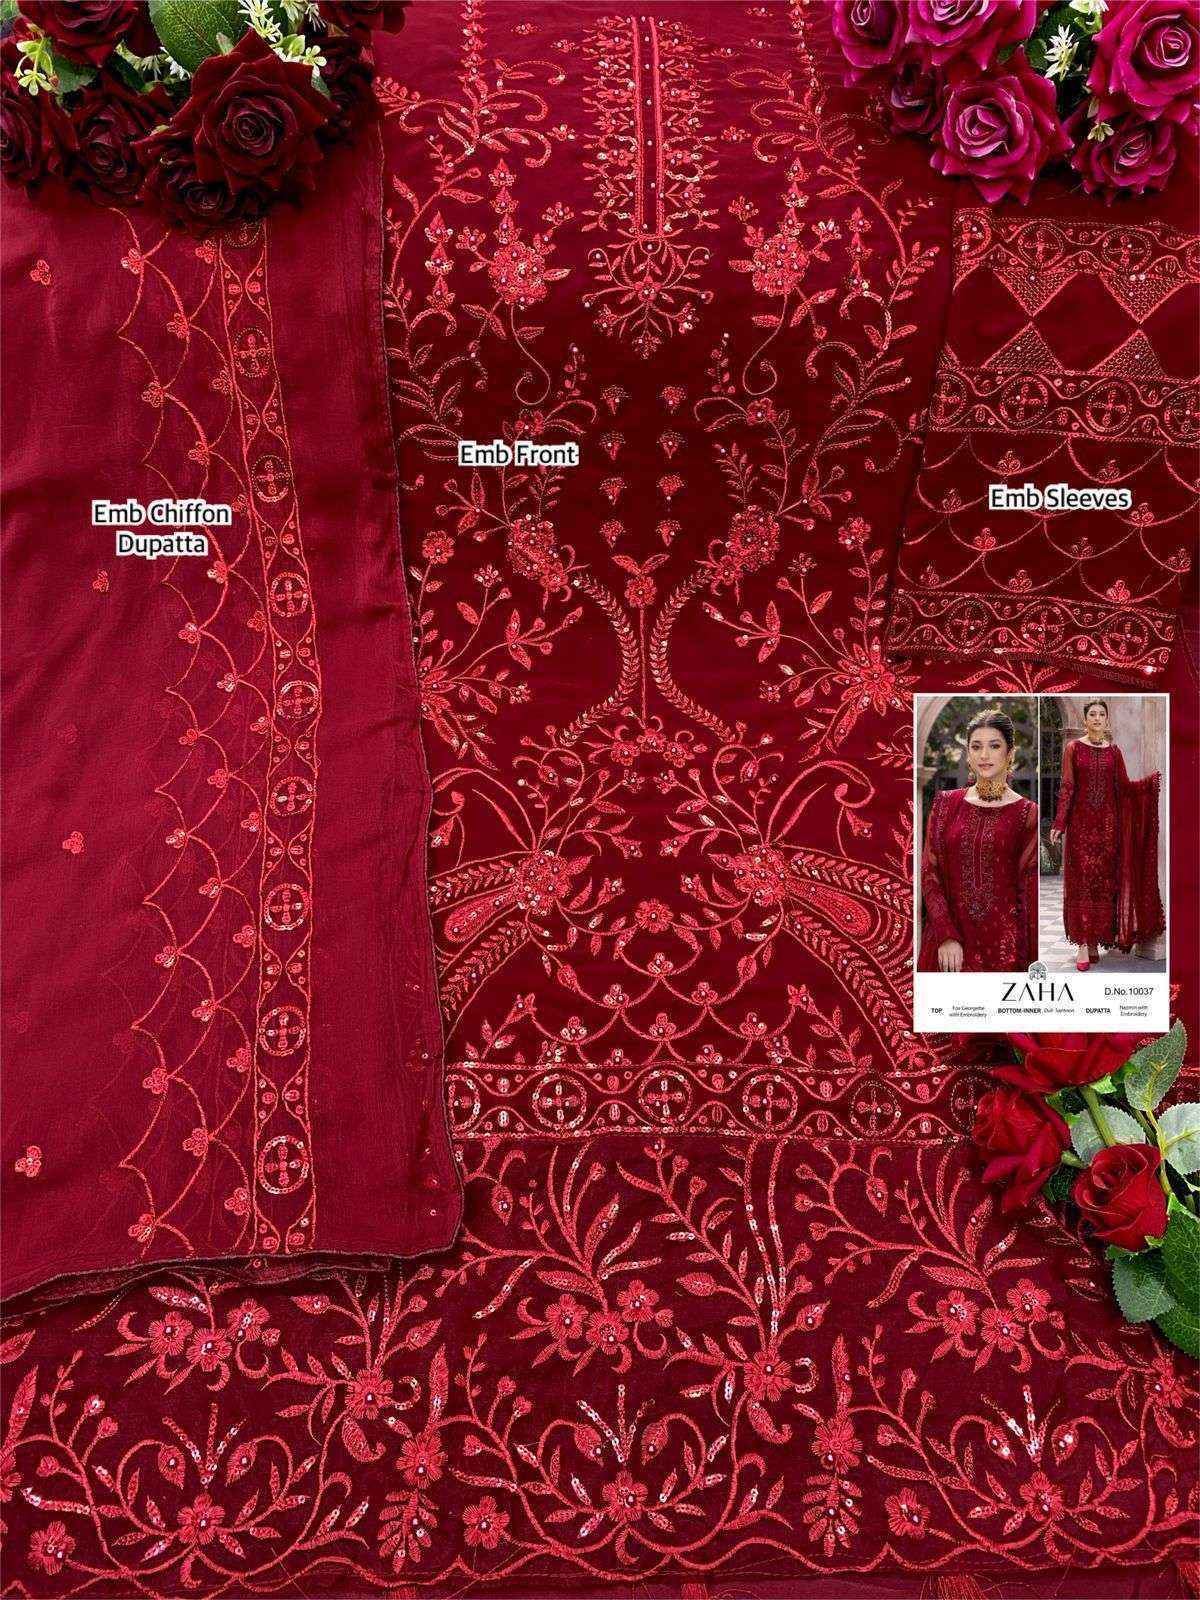 Zaha Inaya Vol 2 Georgette Dress Material 5 pcs Catalogue